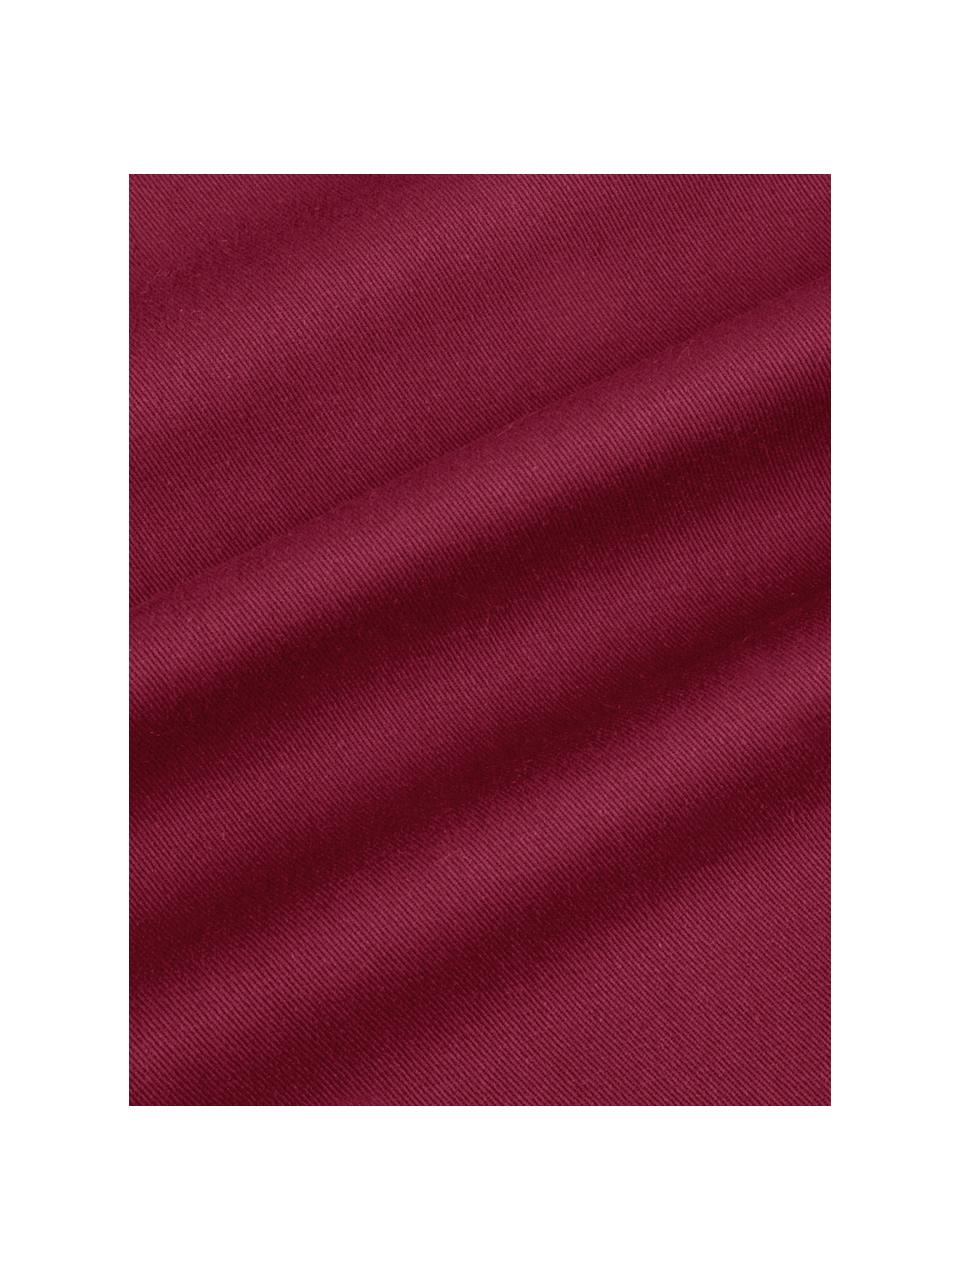 Baumwoll-Kissenhülle Mads in Rot, 100% Baumwolle, Rot, 40 x 40 cm